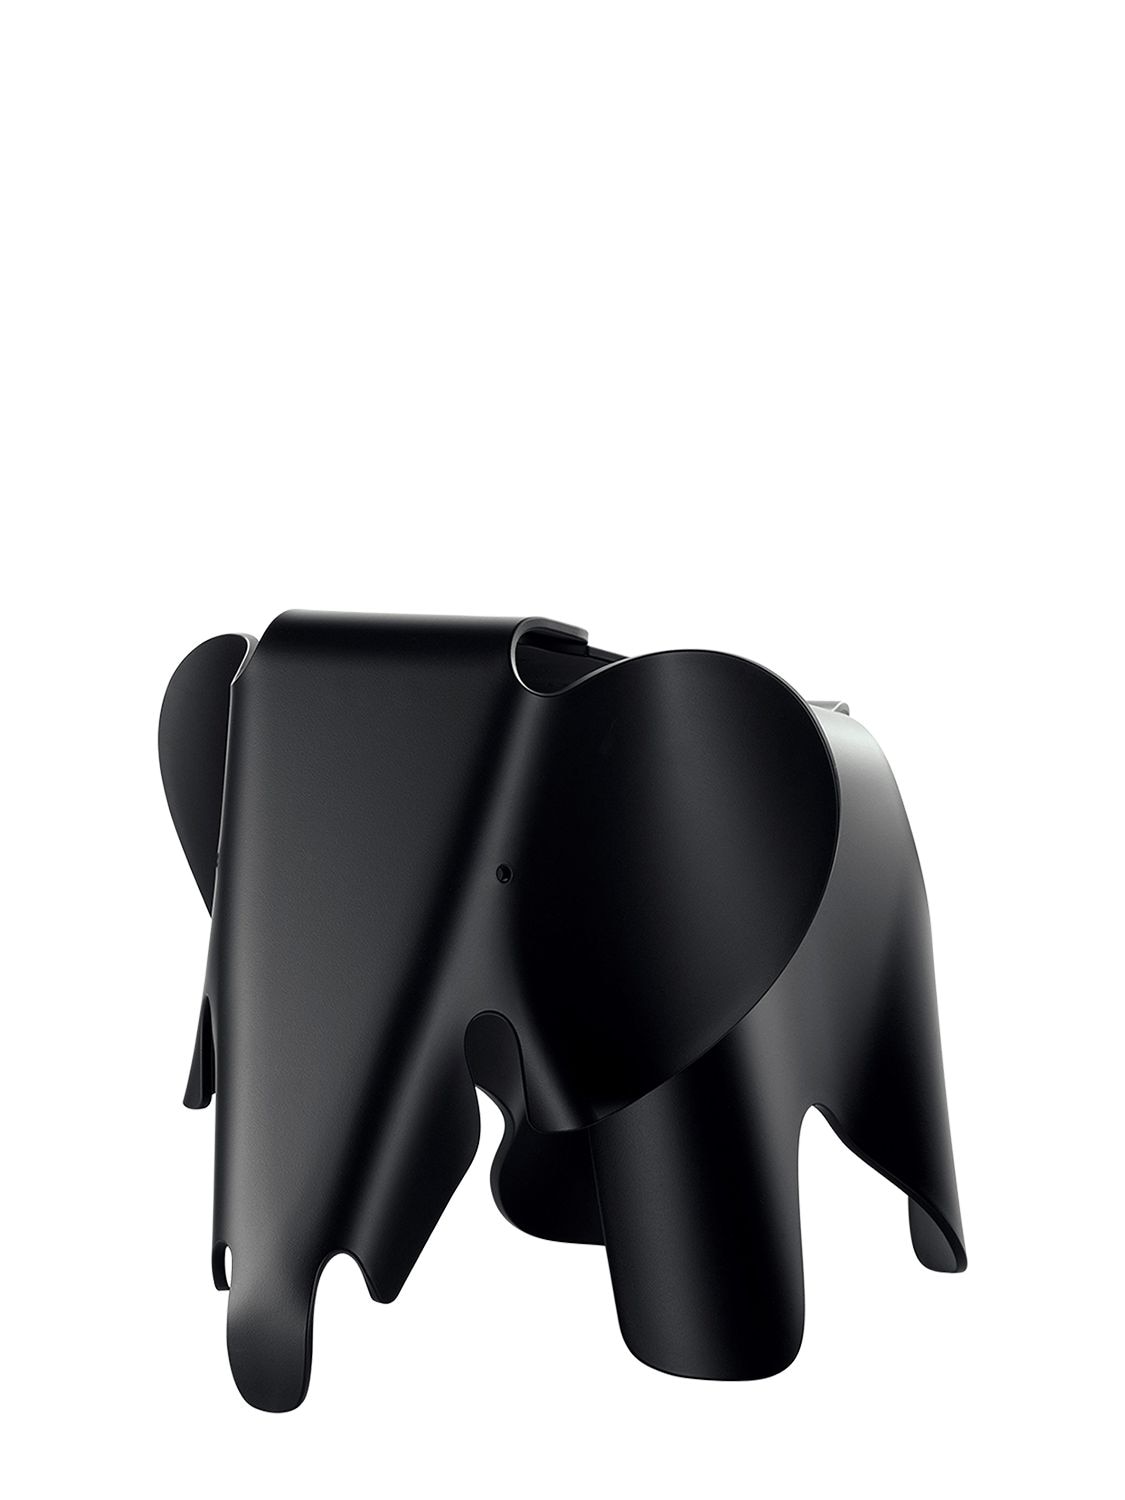 Image of Small Eames Elephant